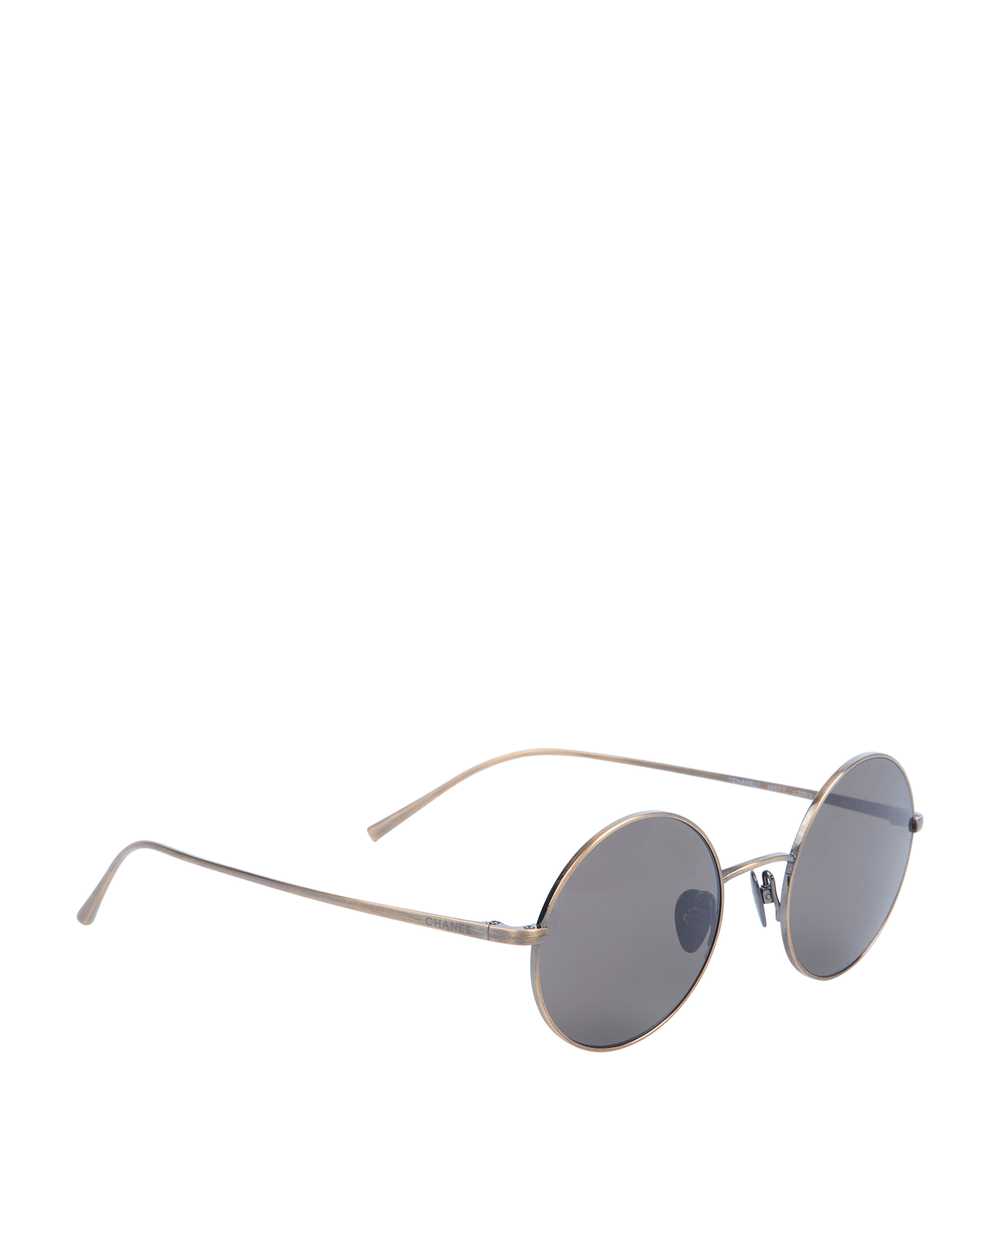 Sunglasses Chanel Round Sunglasses - image 2